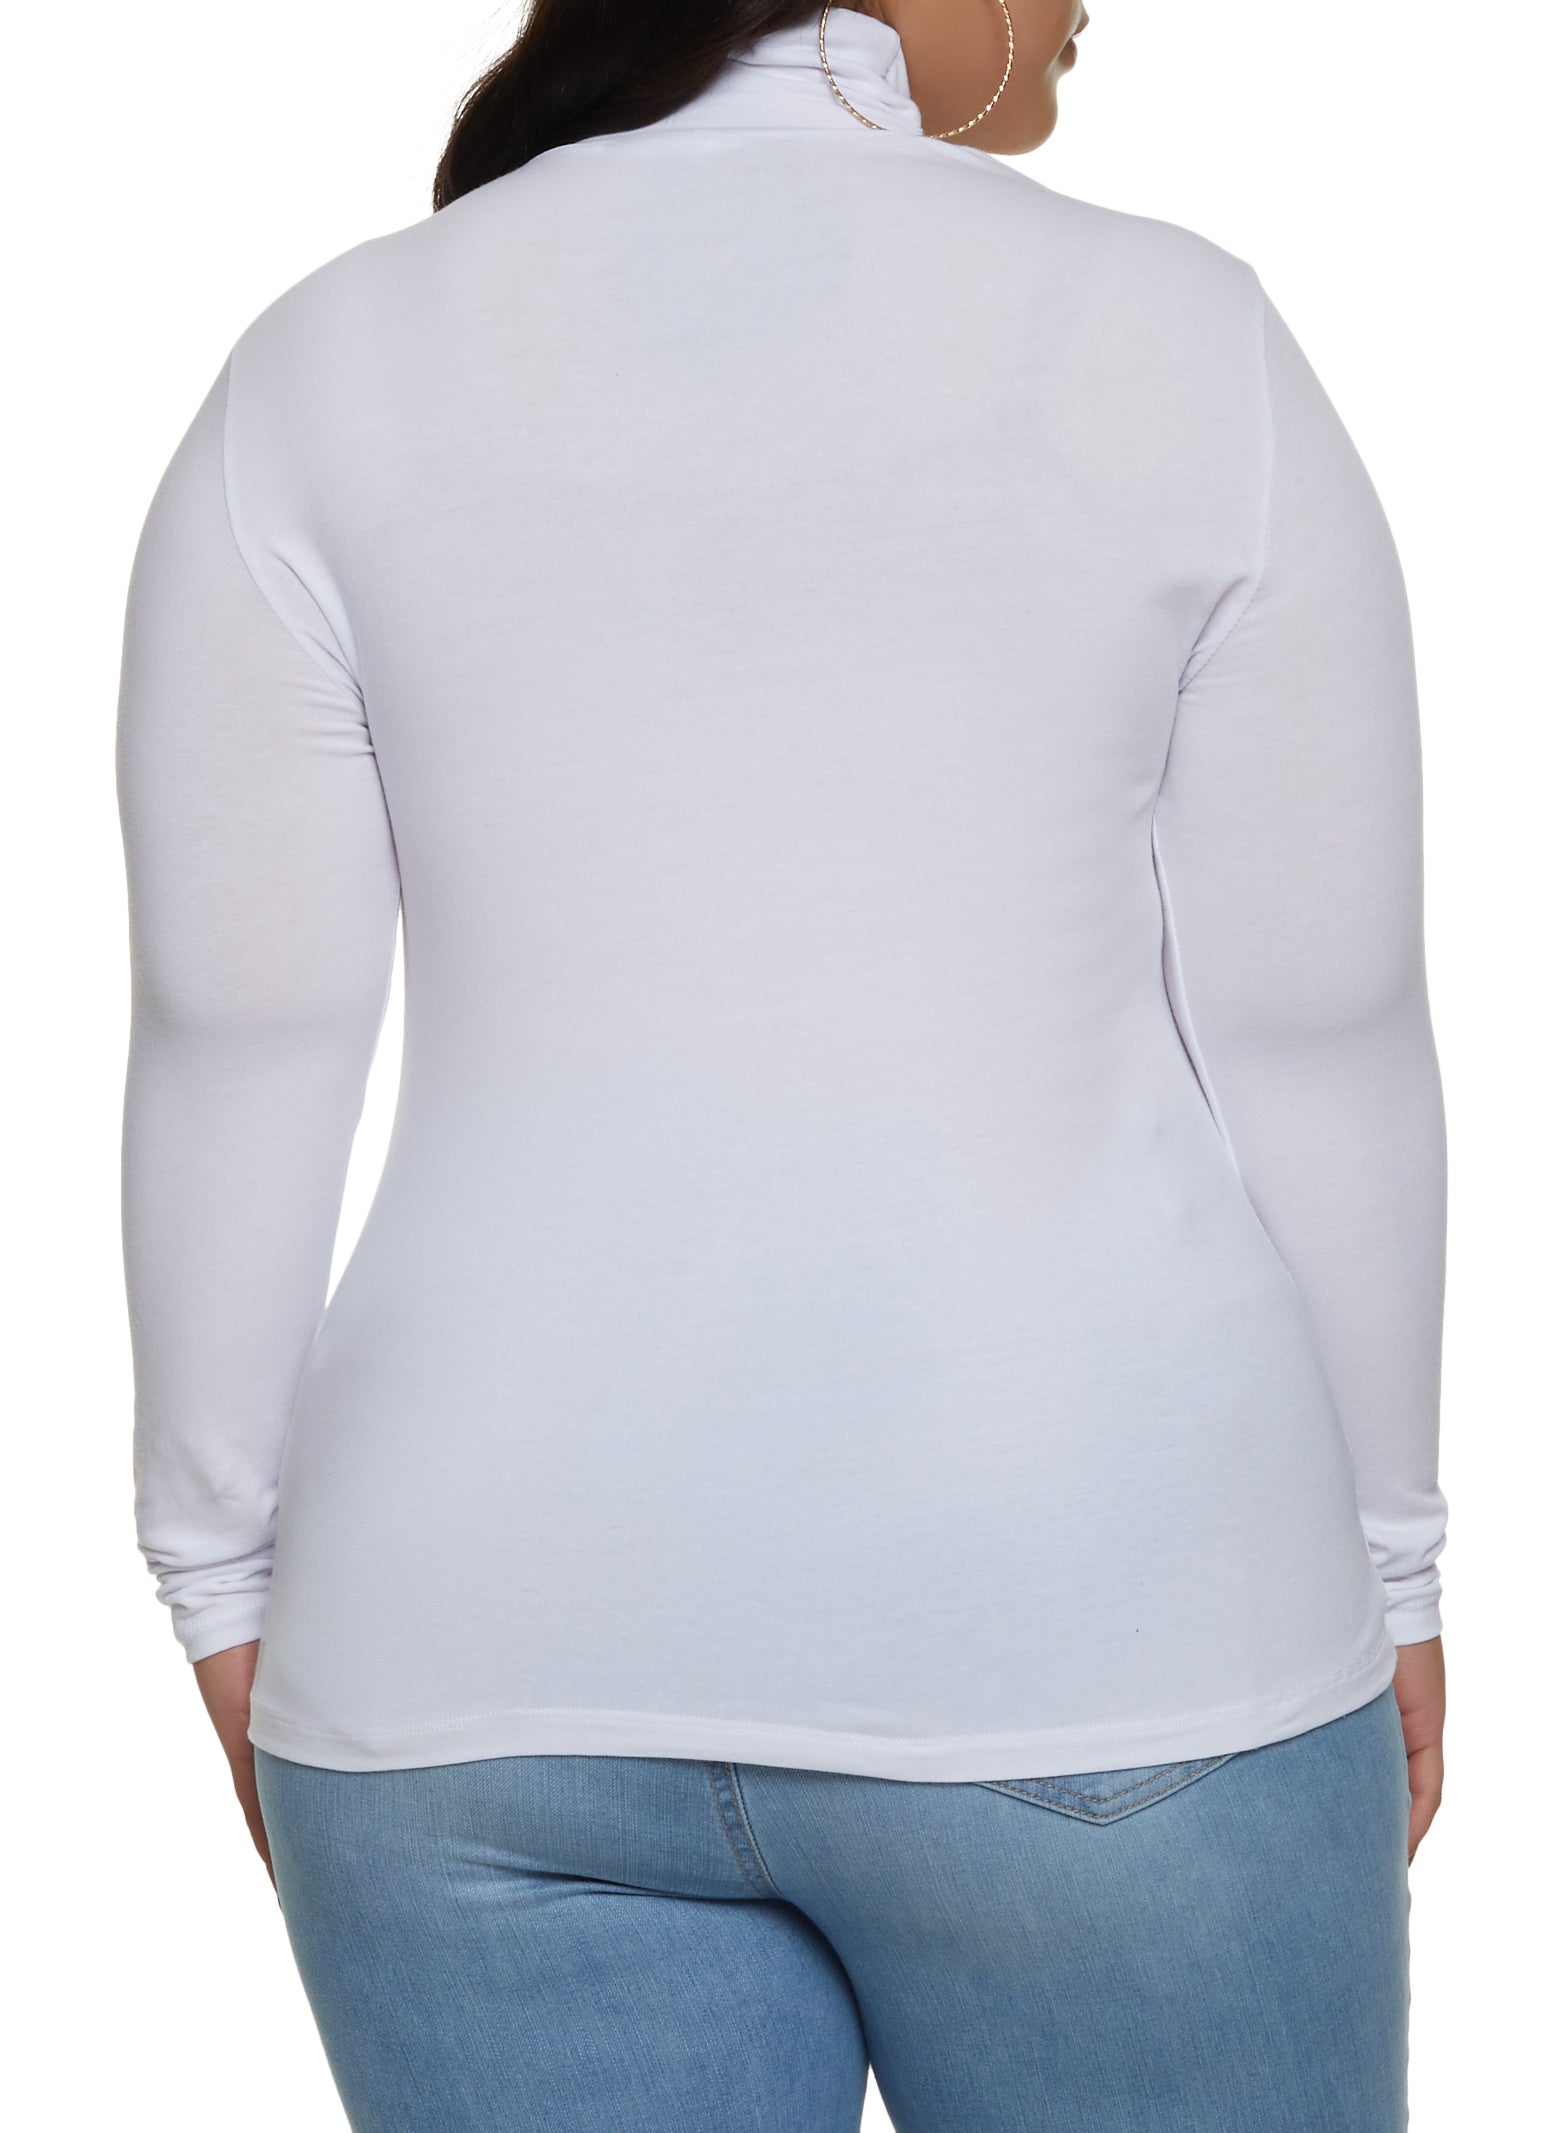 Plus Size Long Sleeve Turtleneck Top - White